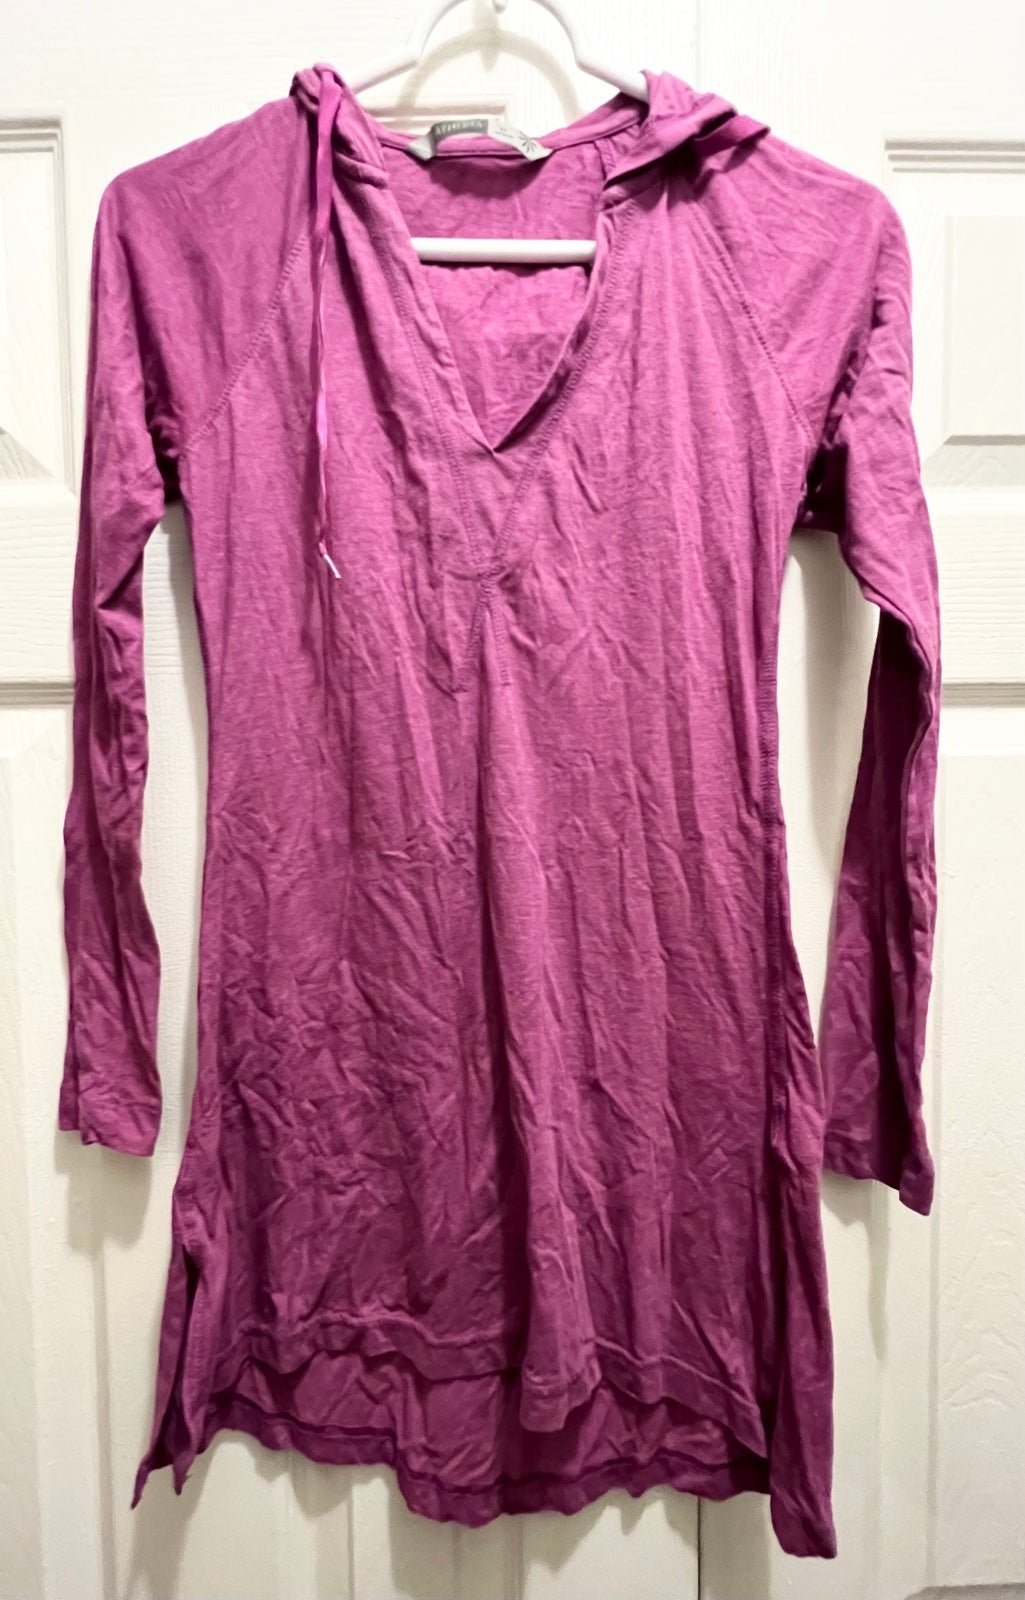 reasonable price Athleta - Hooded Shirt - Purple - Size XS Ok0fERMyo just buy it